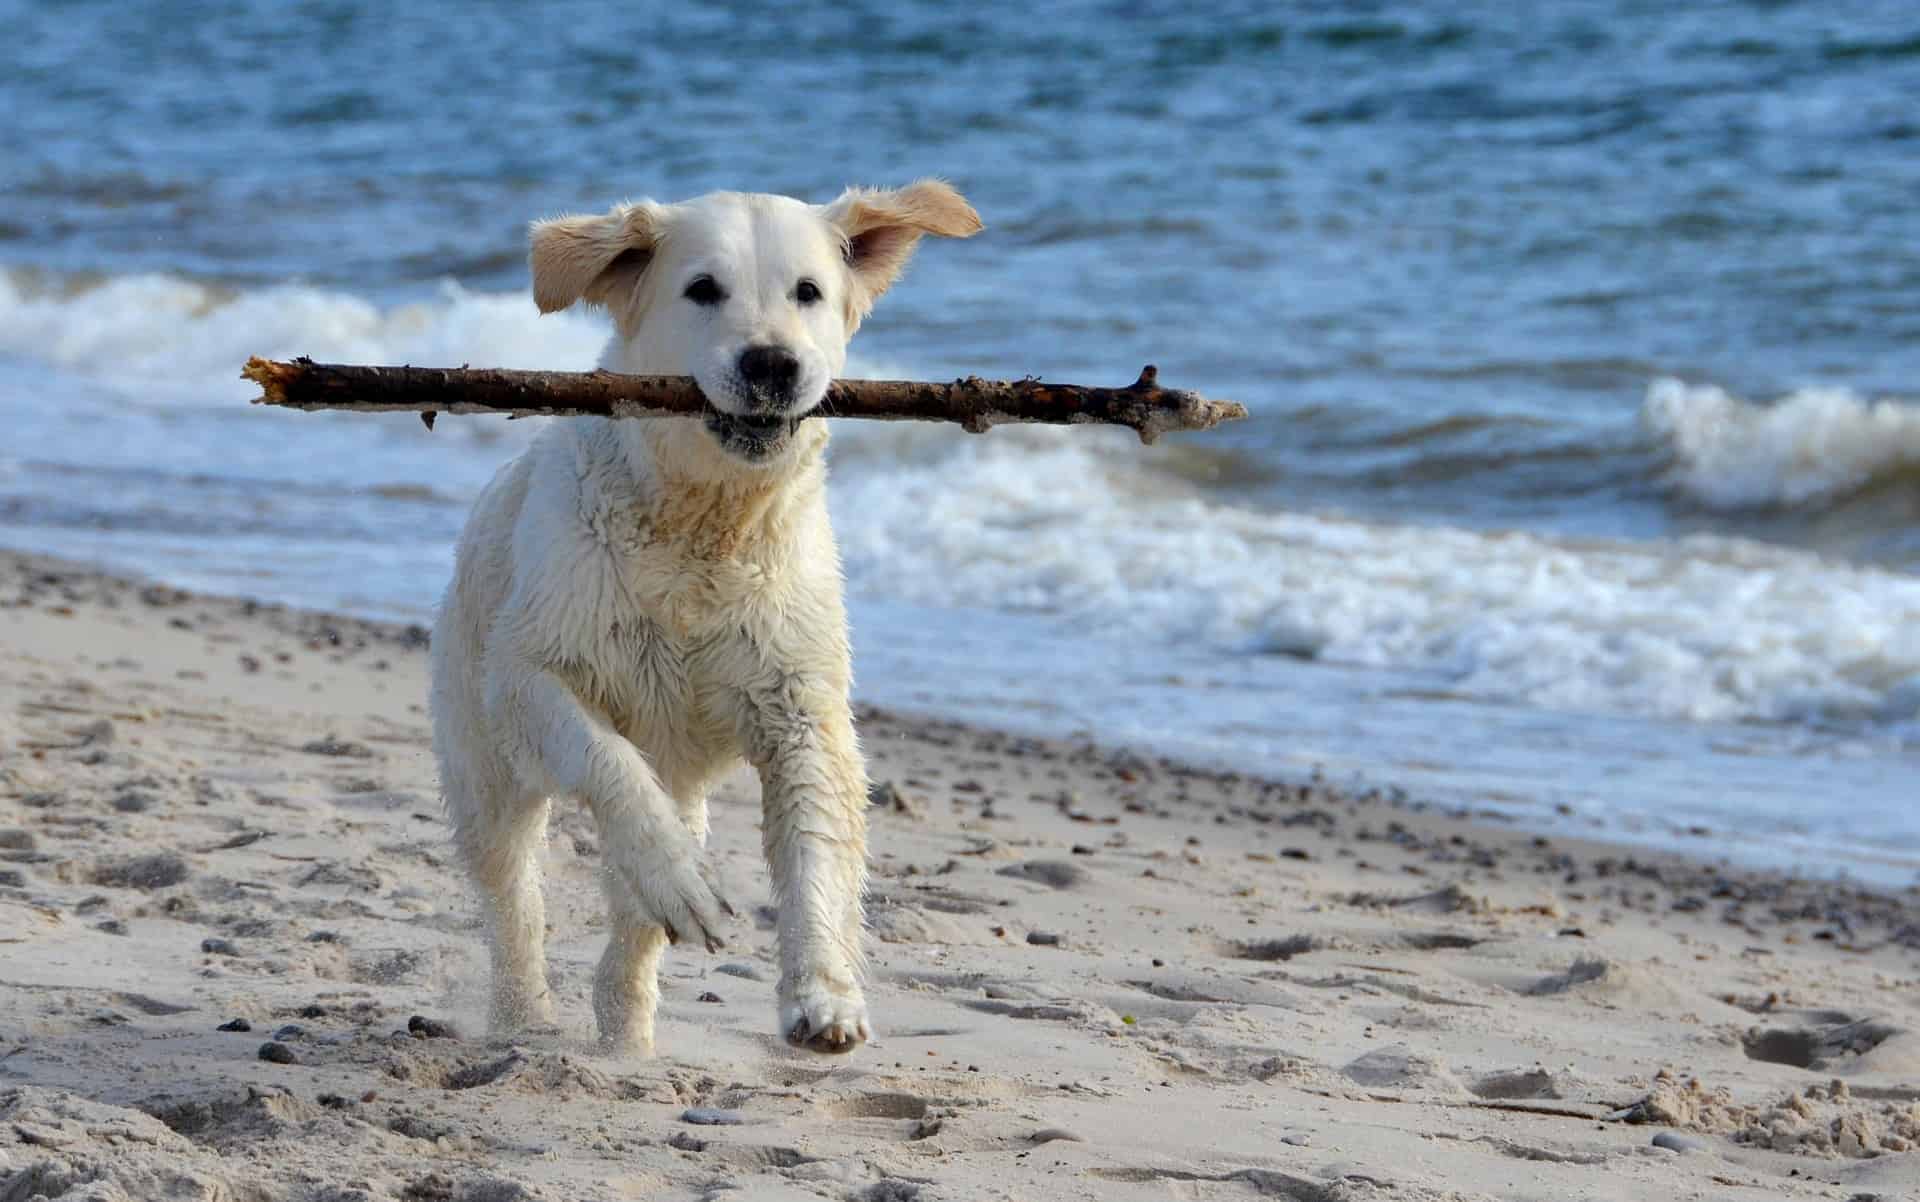 Urlaub mit Hund, Hund am Strand mit Holz im Maul. (c) pixabay